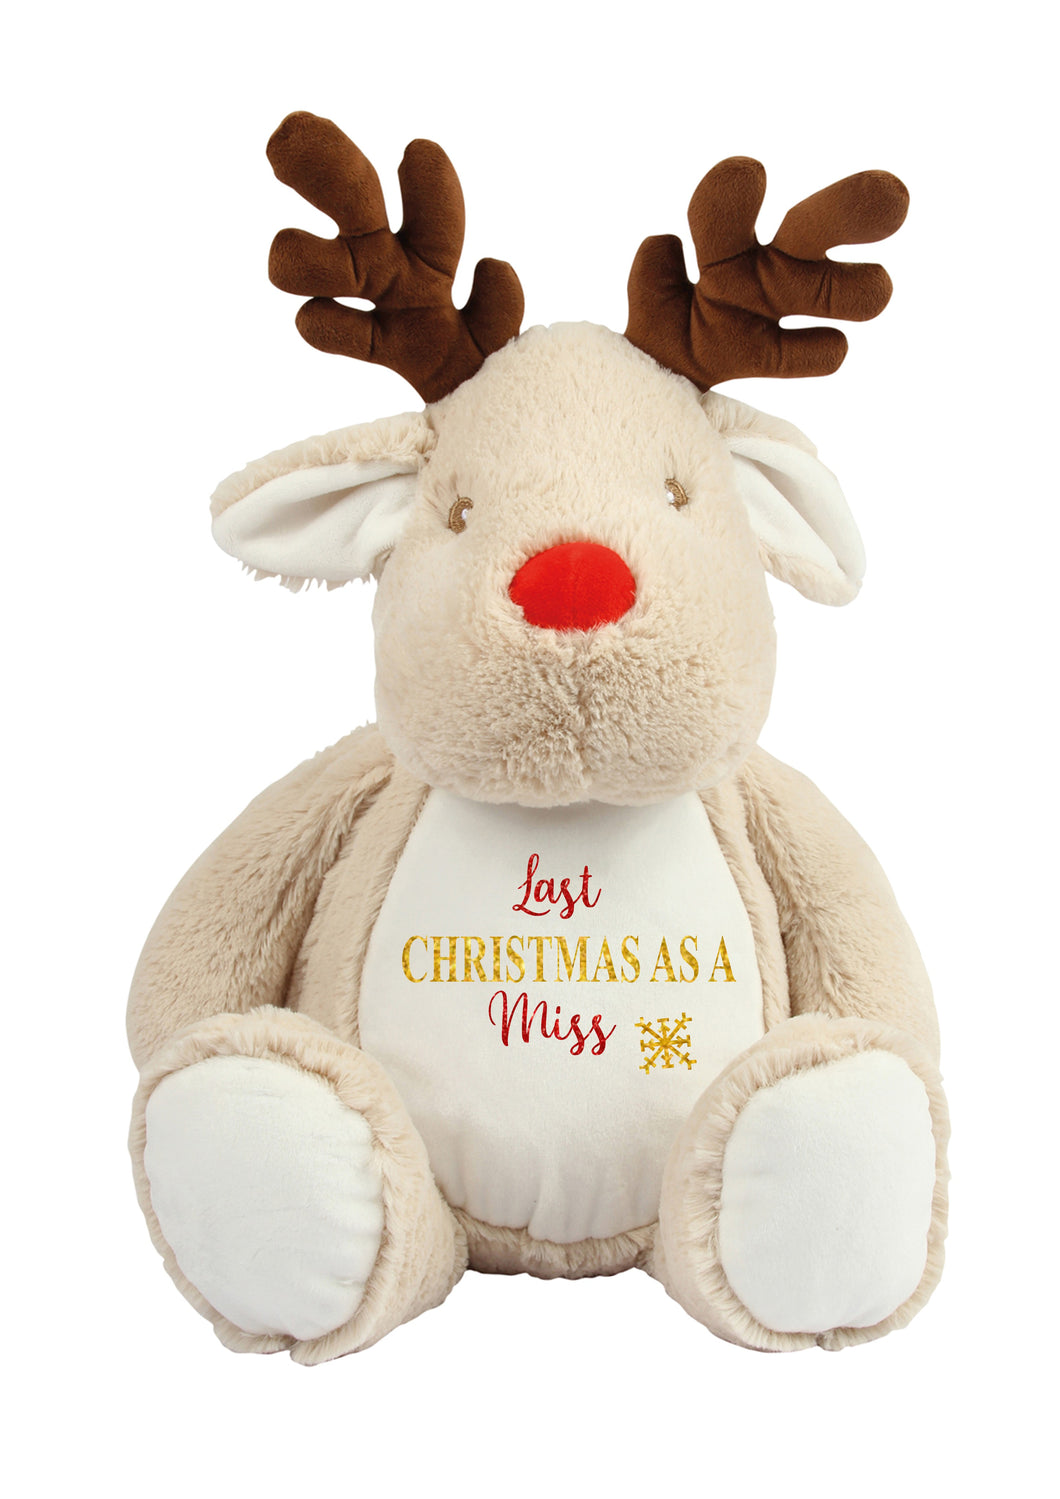 Last Christmas as a Miss Christmas GLITTER reindeer